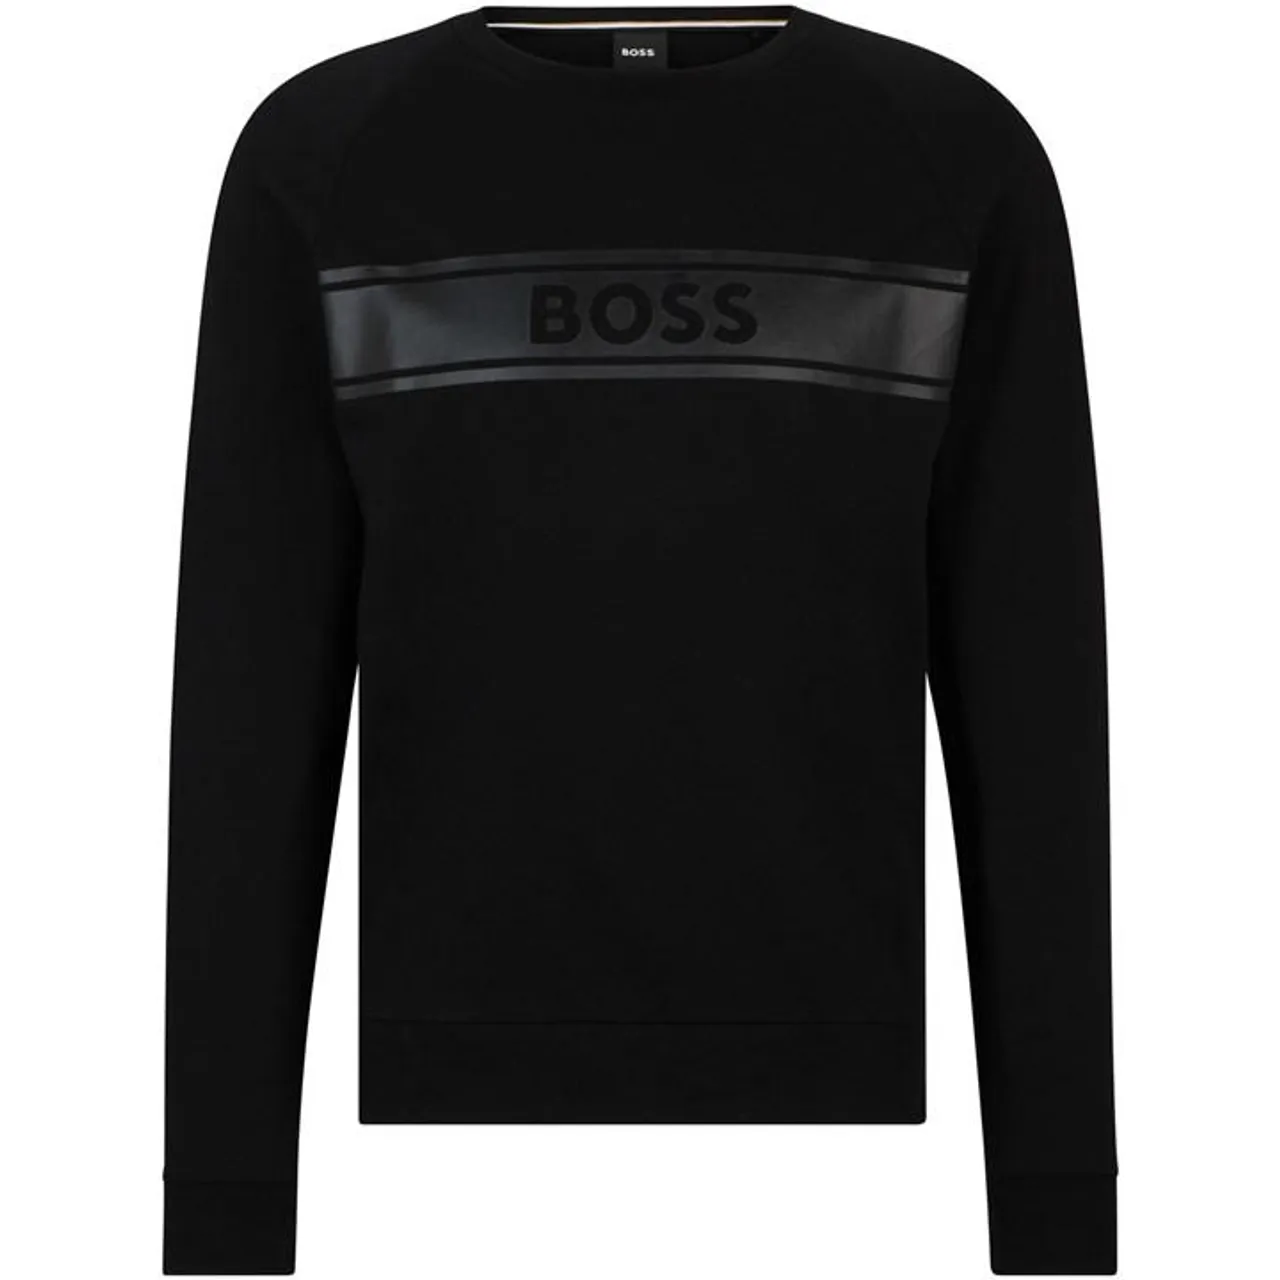 Boss Authentic Sweatshirt 10208539 - Black